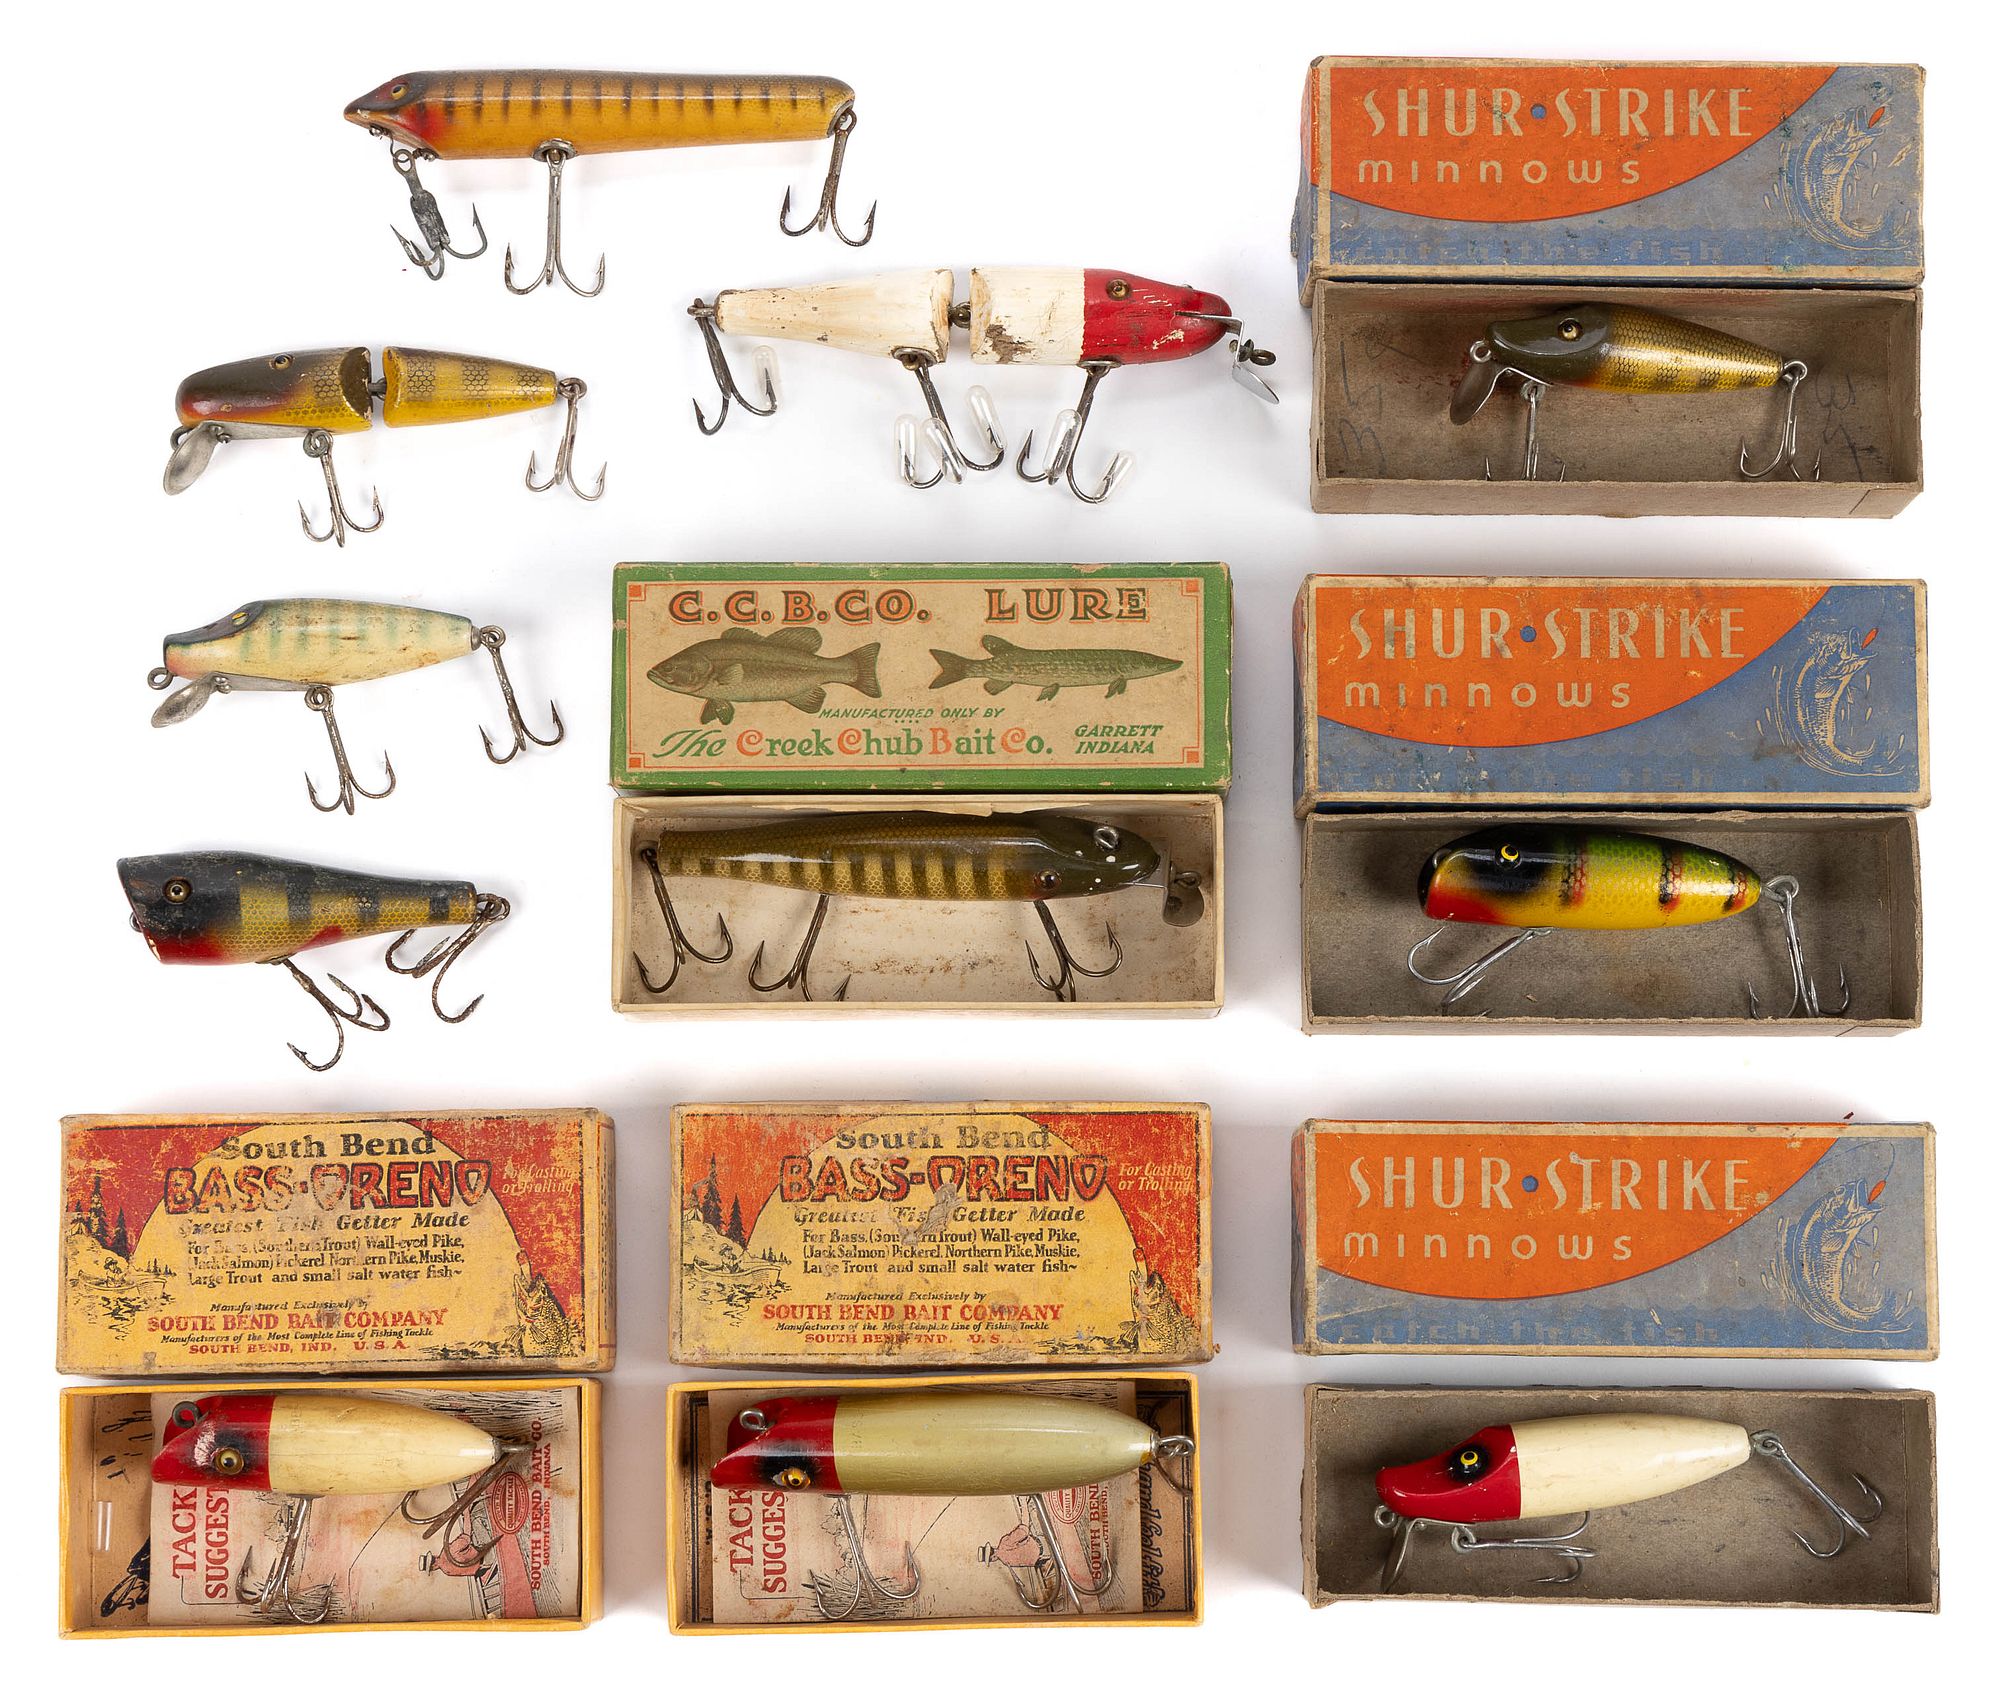 South Bend Two Oreno Lure  Diy fishing lures, Antique fishing lures, Vintage  fishing lures